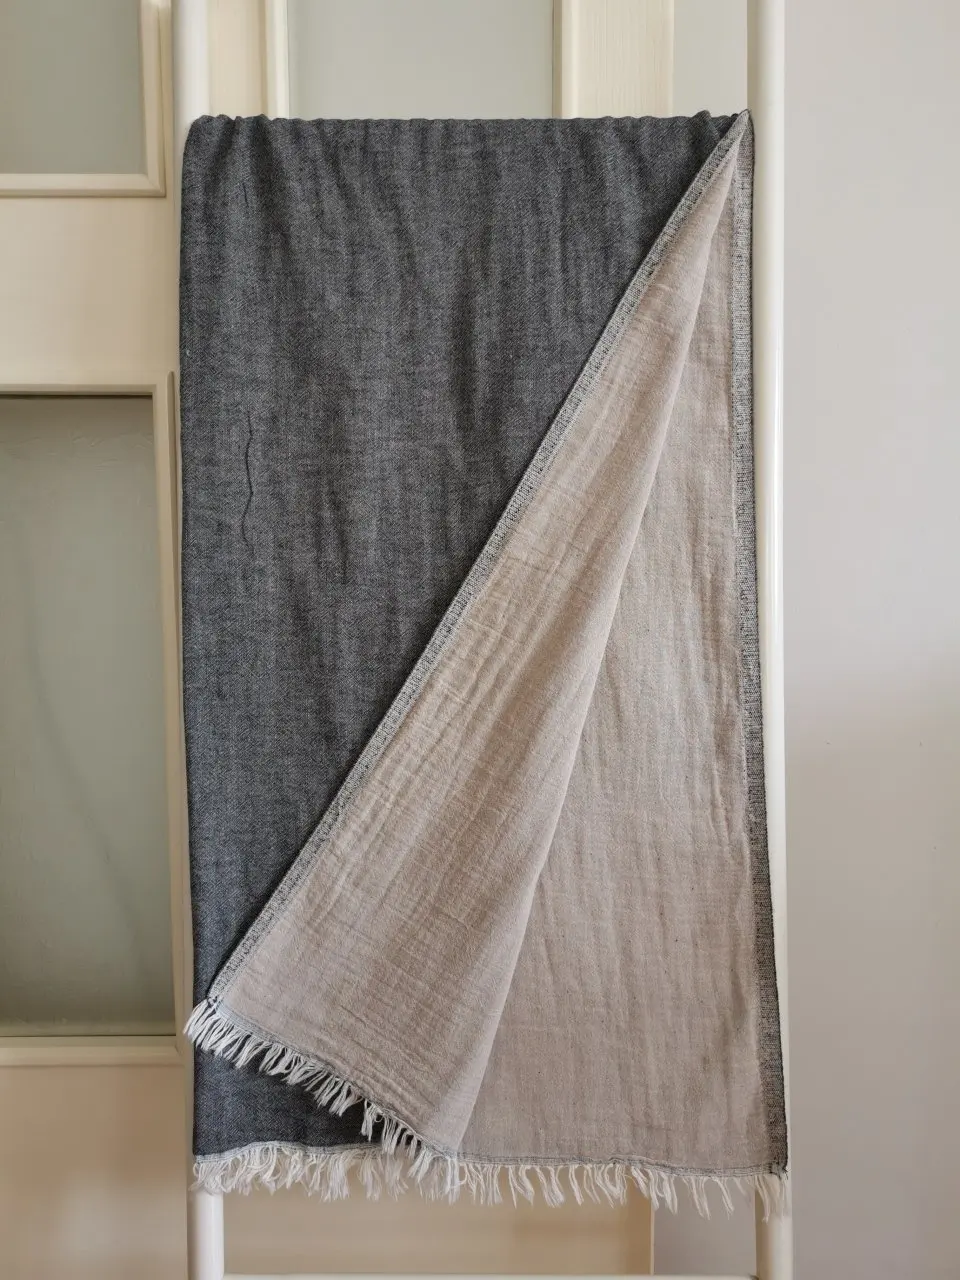 Двухуровневое полотенце для ванной комнаты пляжа сауны спа-душа Хаммам пештемал